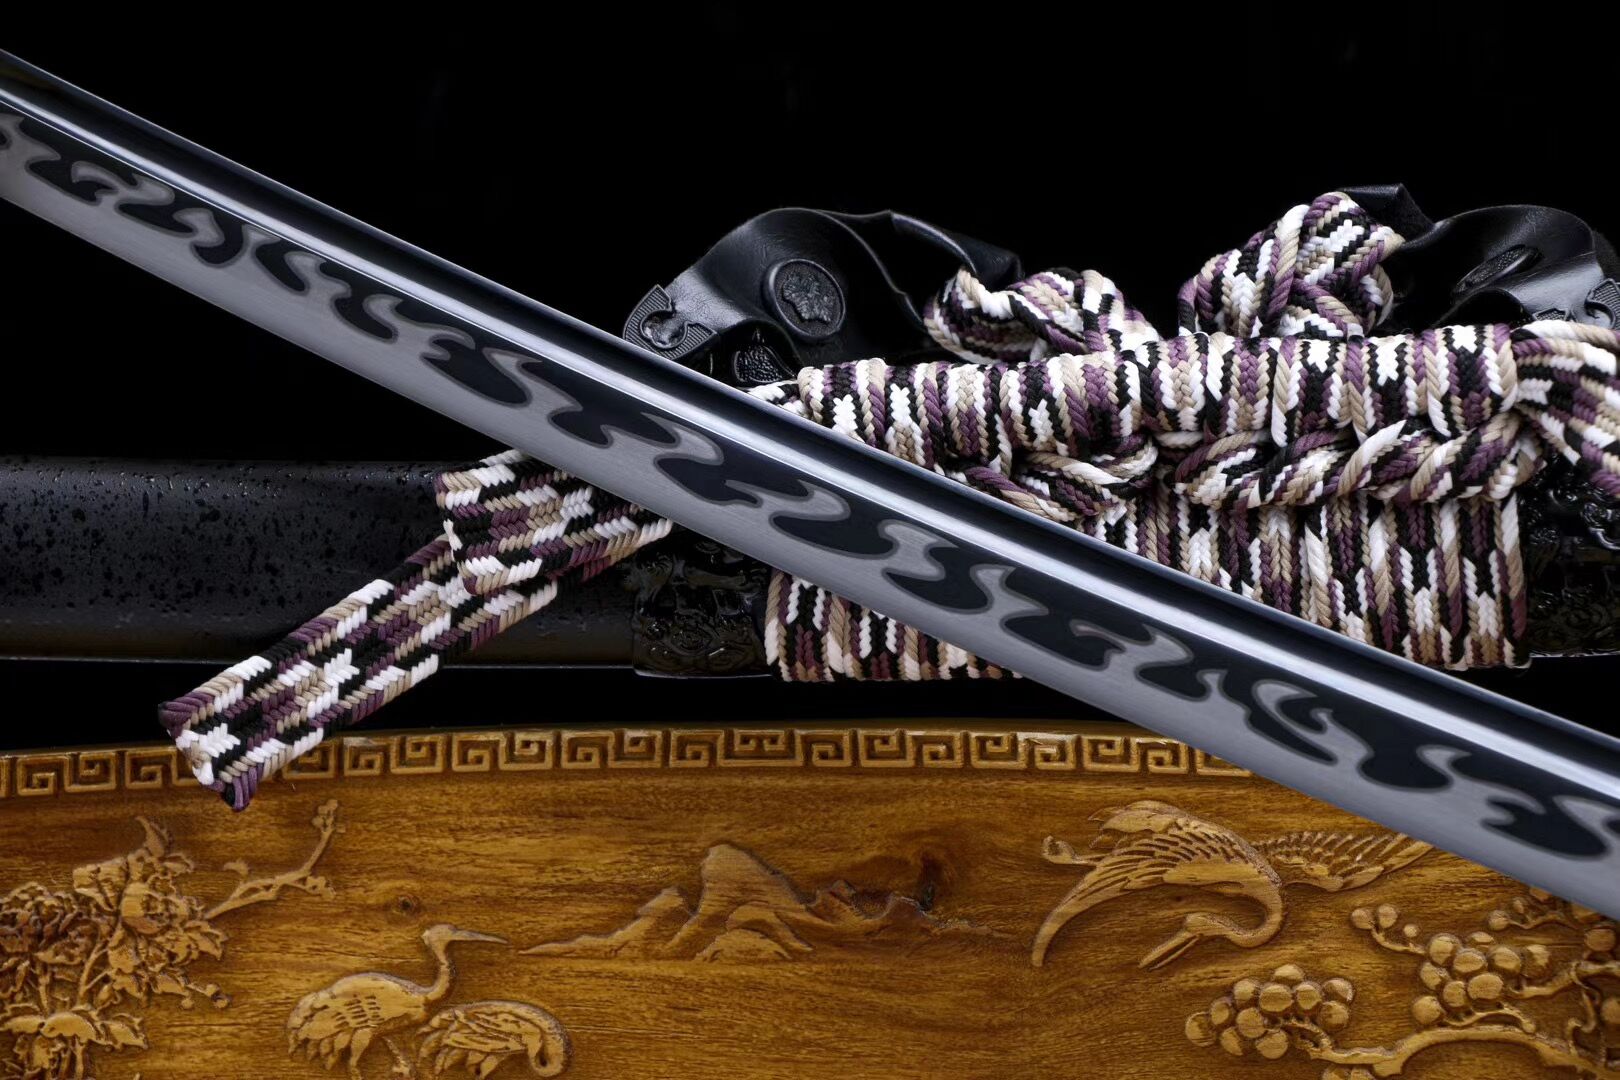 Sumagano-Samuraischwert, Gebackene schwarze Serie, Katana, Hochmanganstahl, Longquan-Schwert